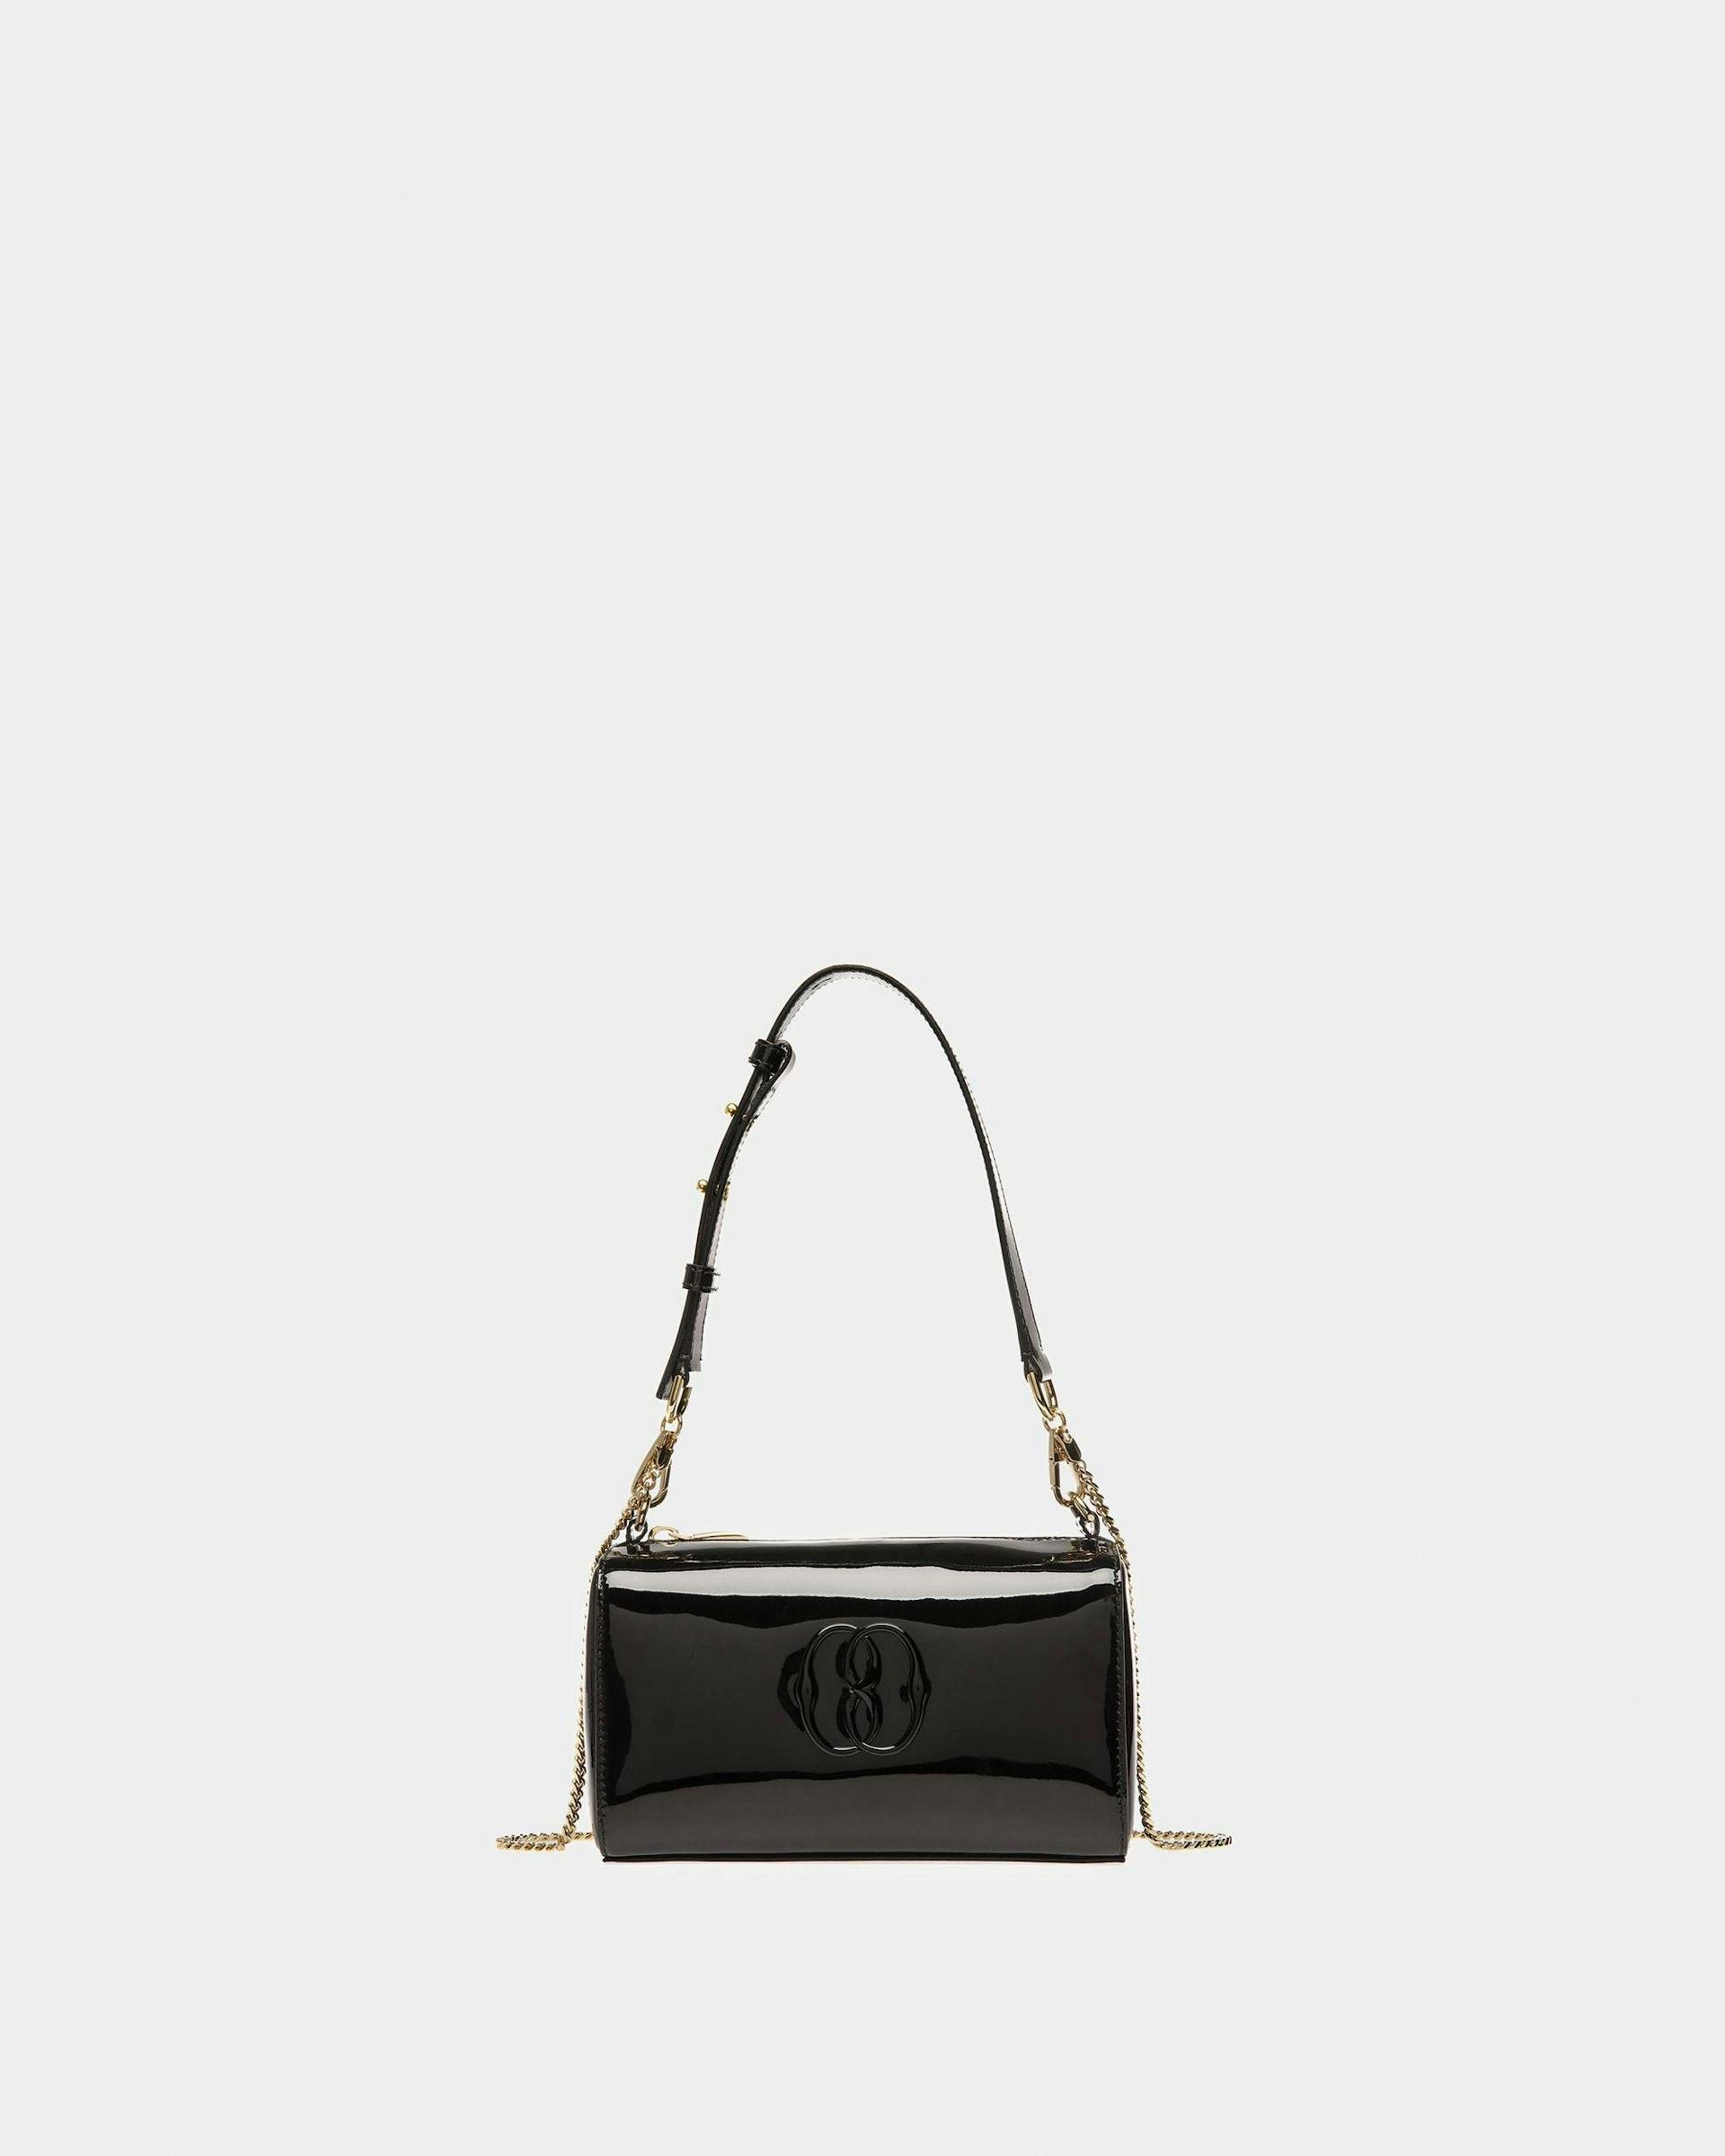 Emblem Rox Minibag | Women's Minibag | Black Leather | Bally